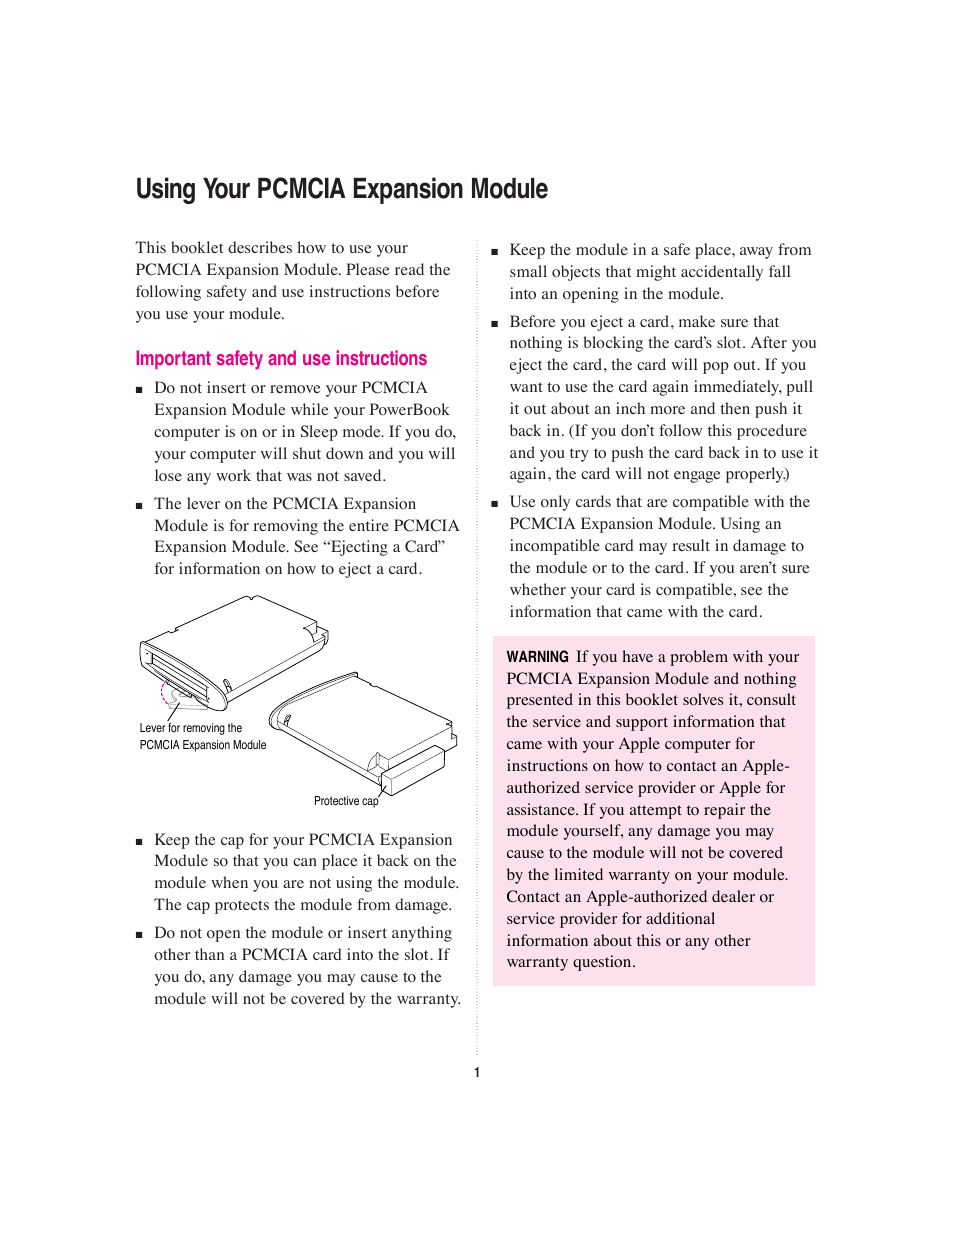 PowerBook PCMCIA Expansion Module